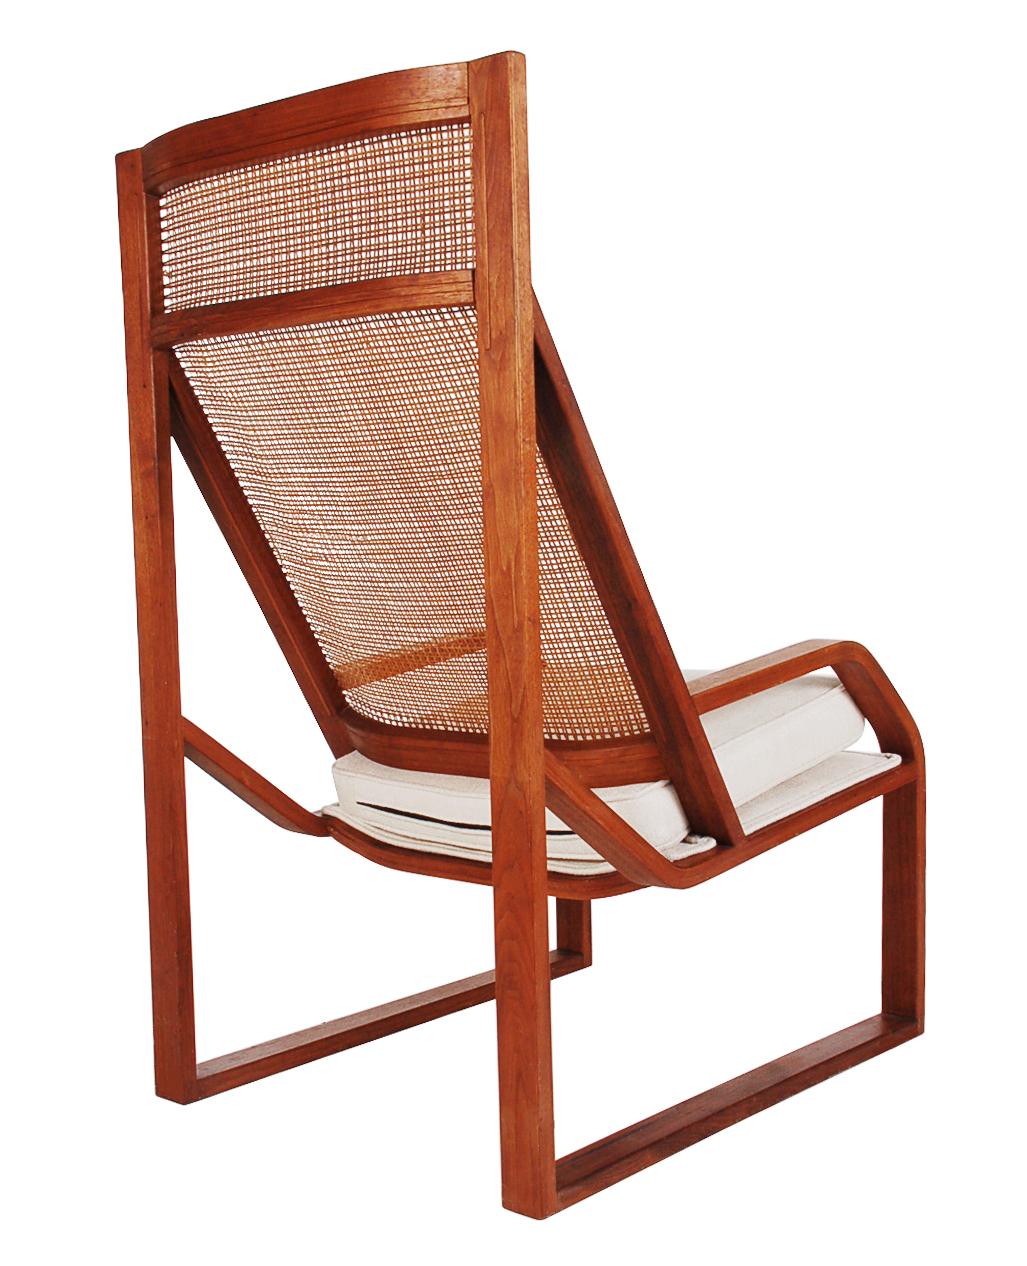 Scandinavian Modern Unusual Large Scale Midcentury Danish Modern Cane and Teak Lounge Chair Armchair